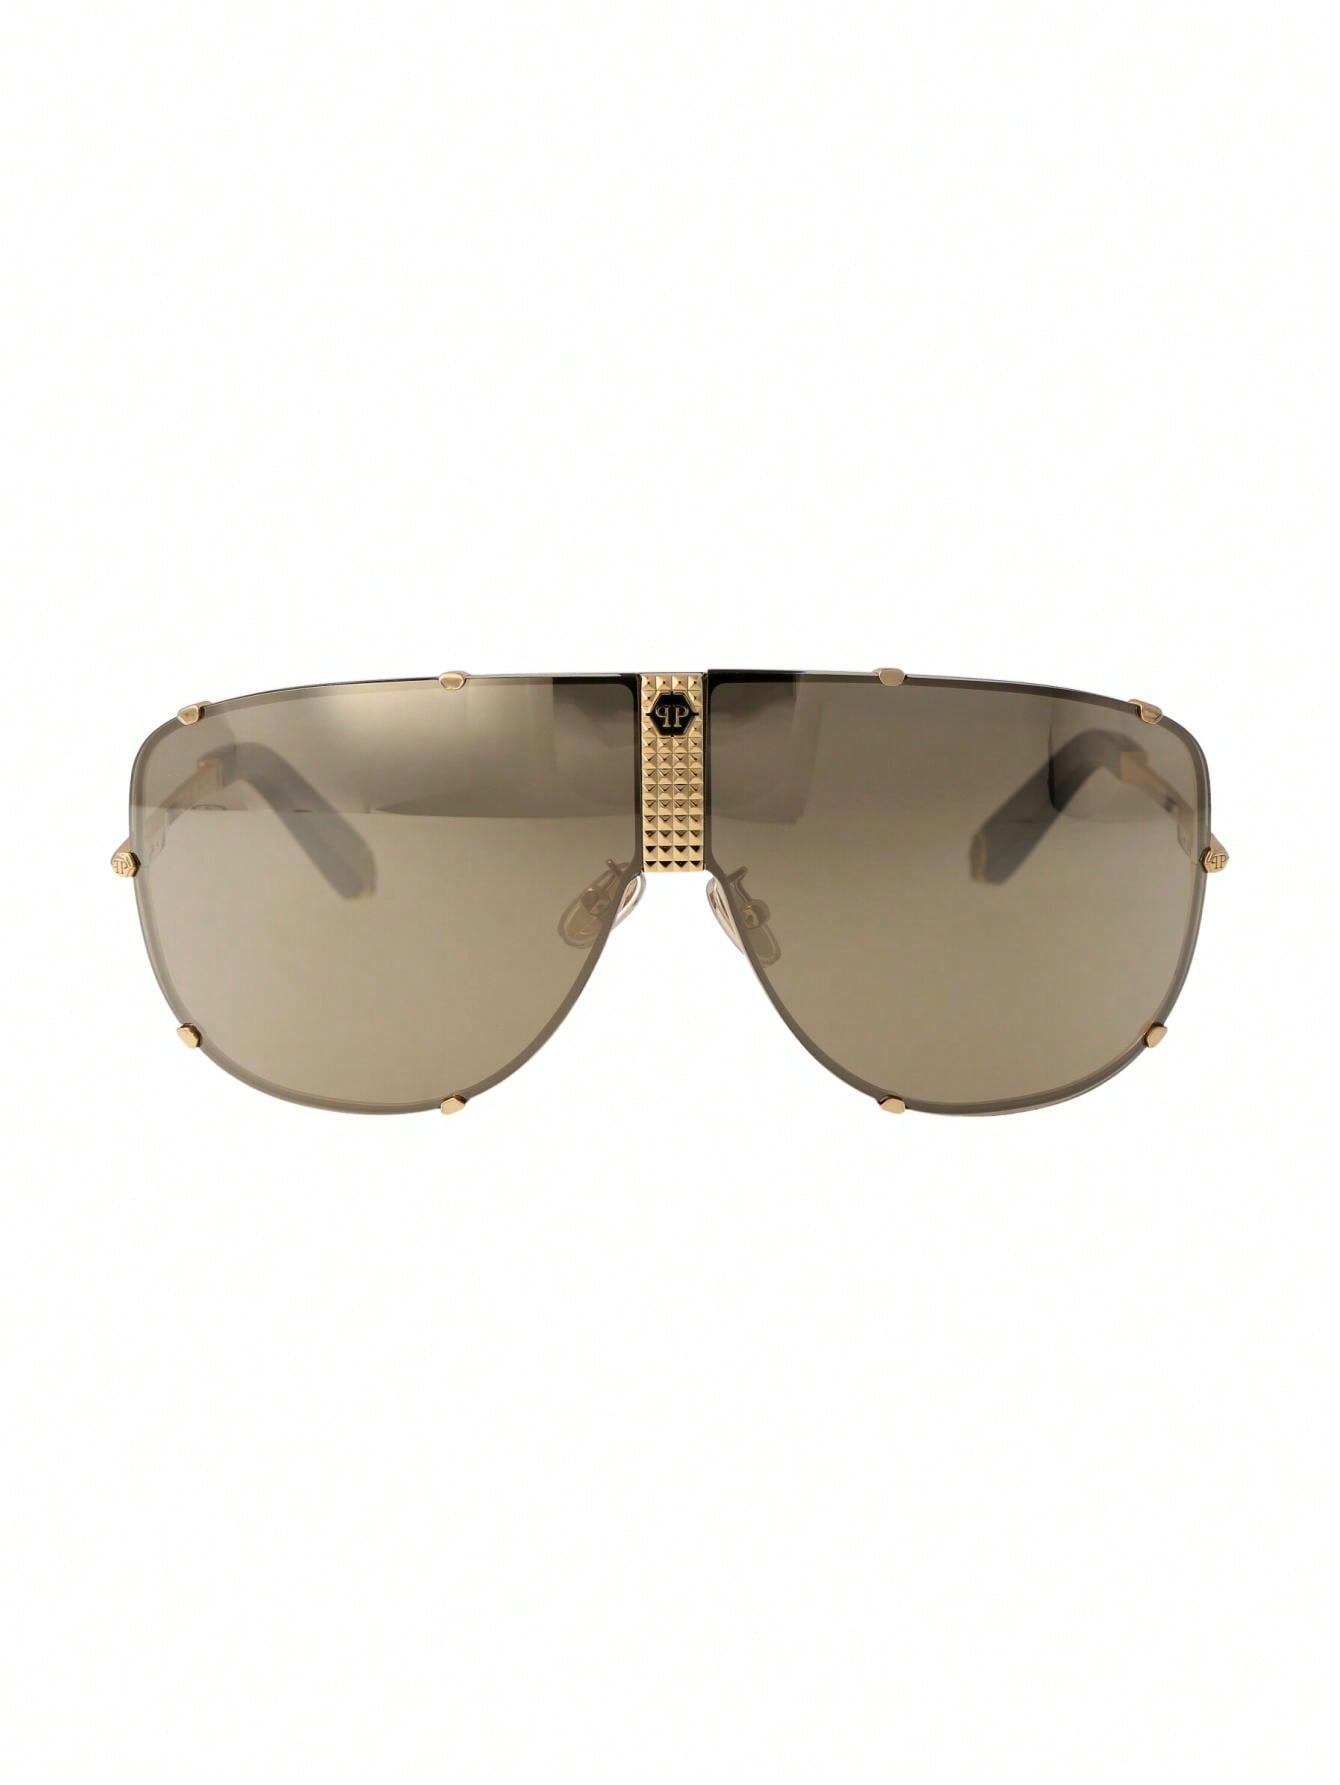 Мужские солнцезащитные очки Philipp Plein DECOR SPP075M400G, многоцветный солнцезащитные очки philipp plein 006m 890x